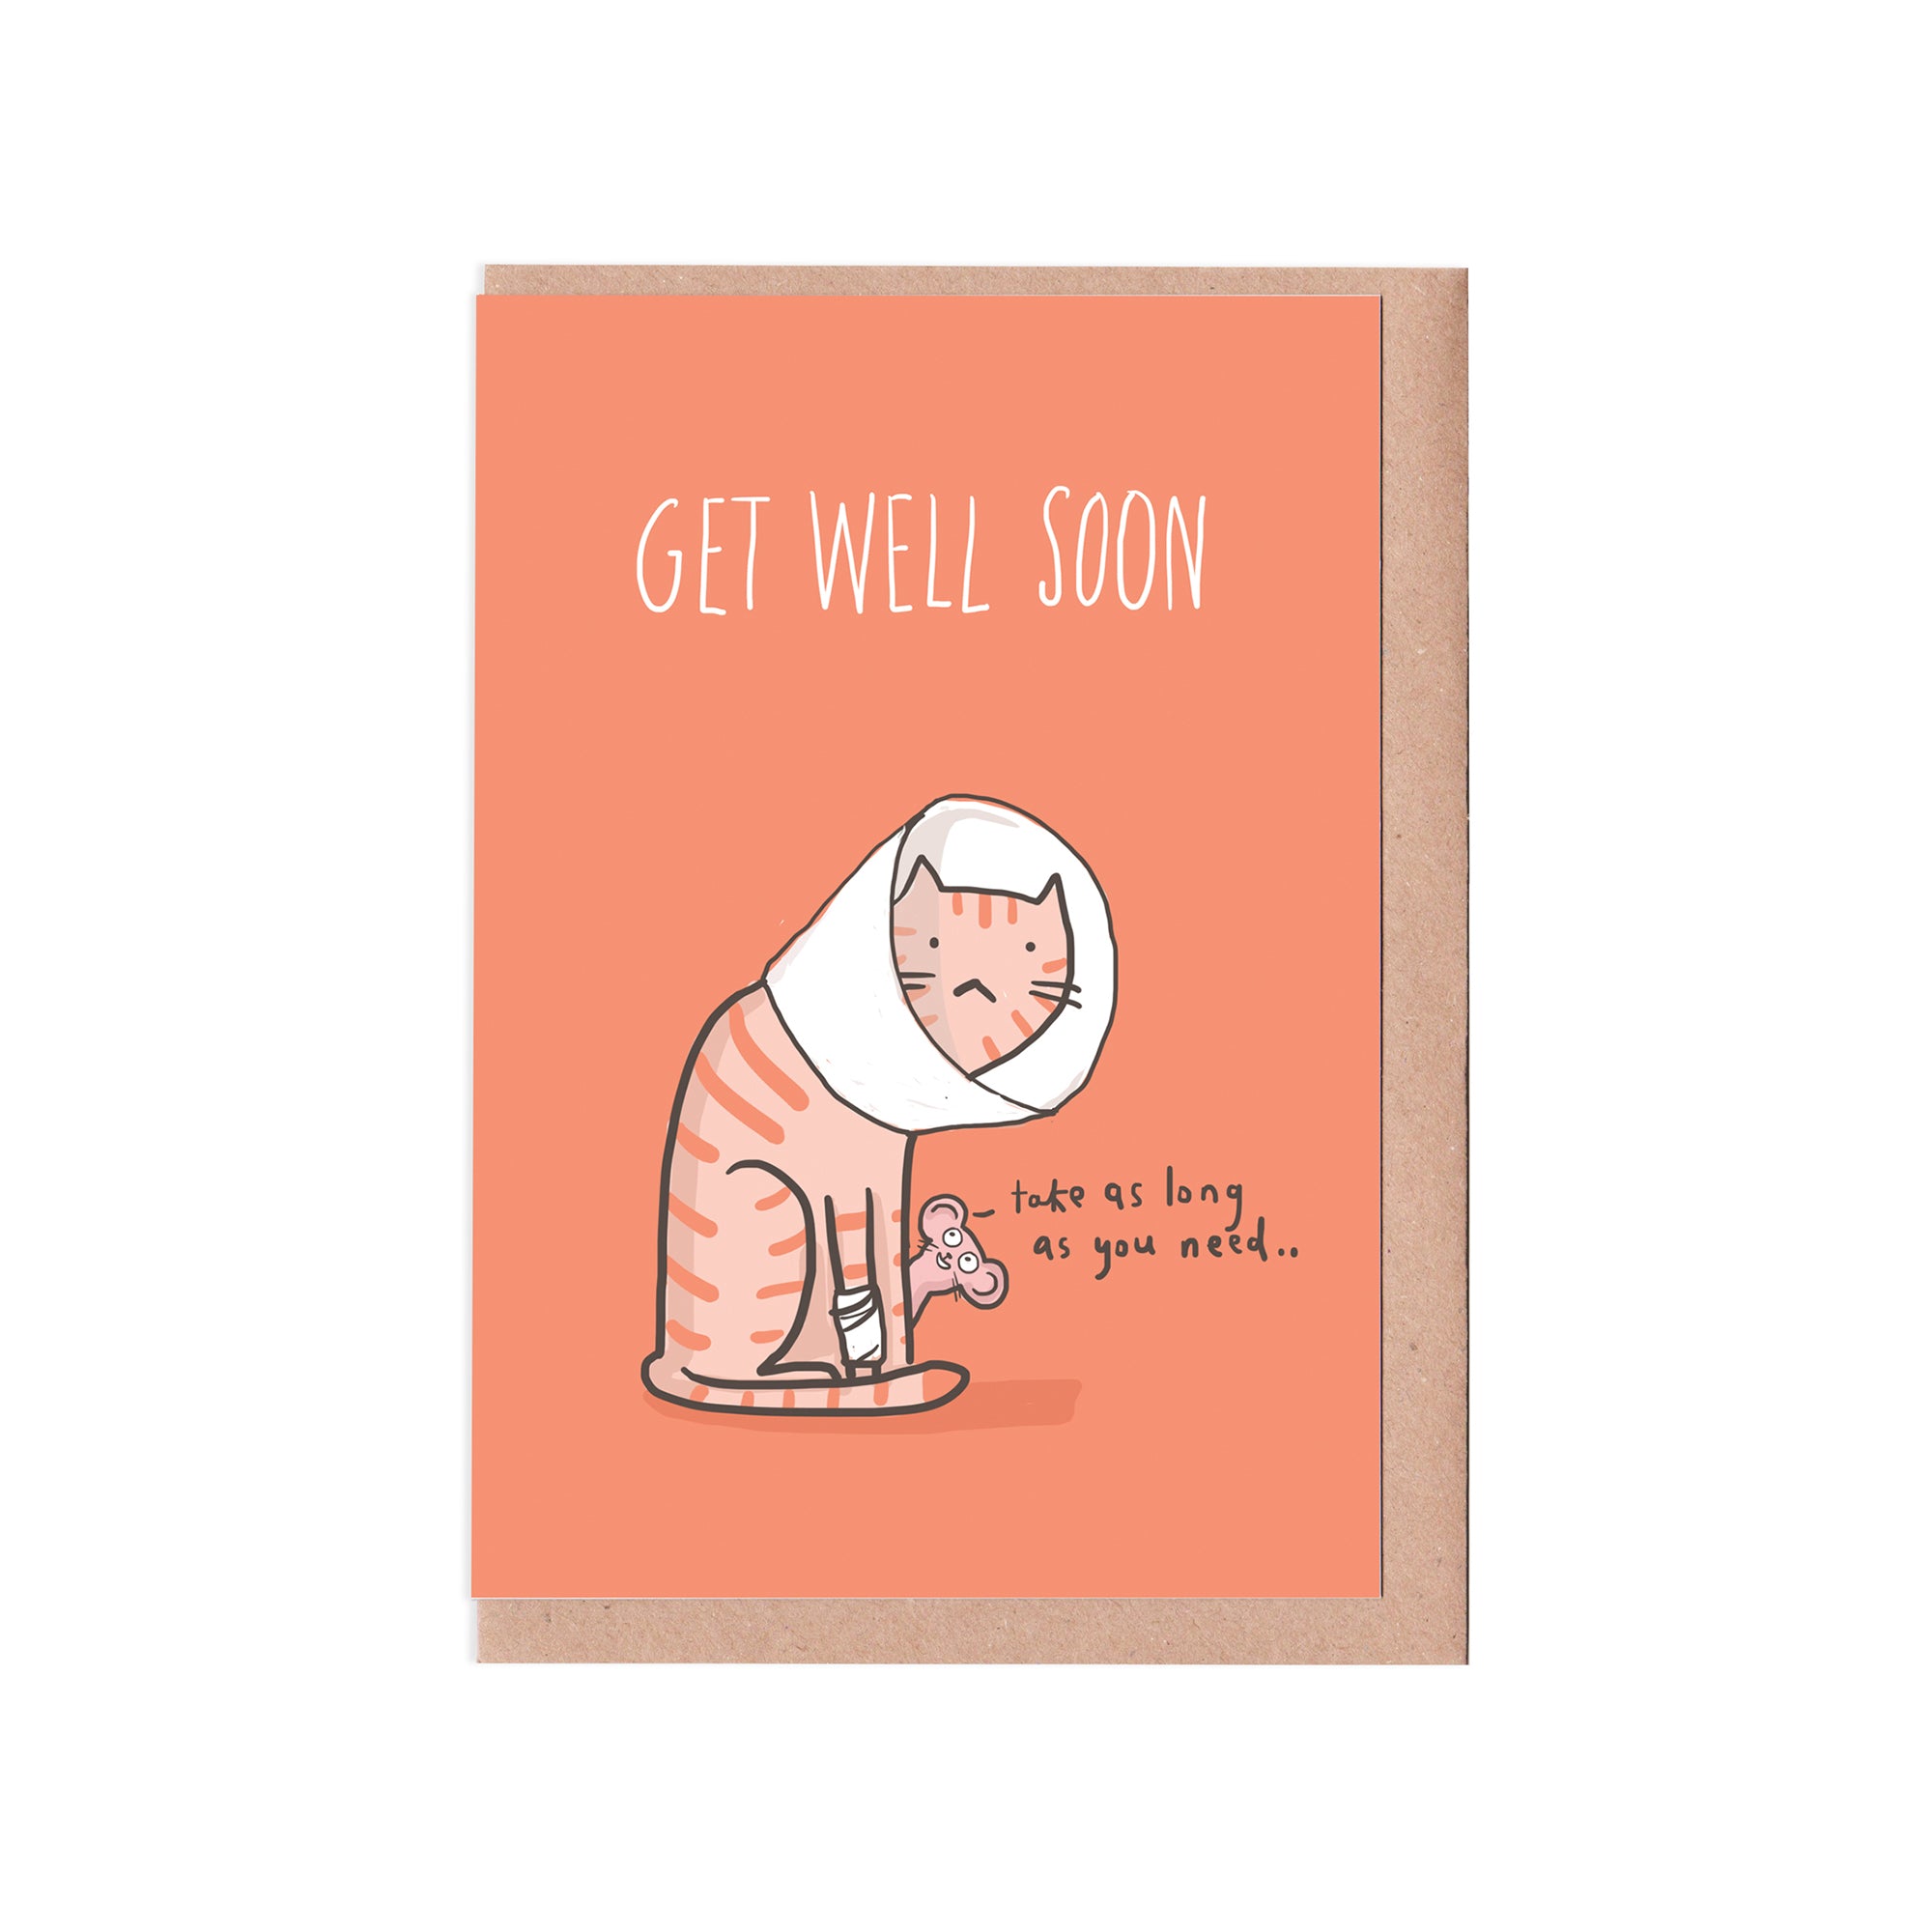 Get well soon cat card